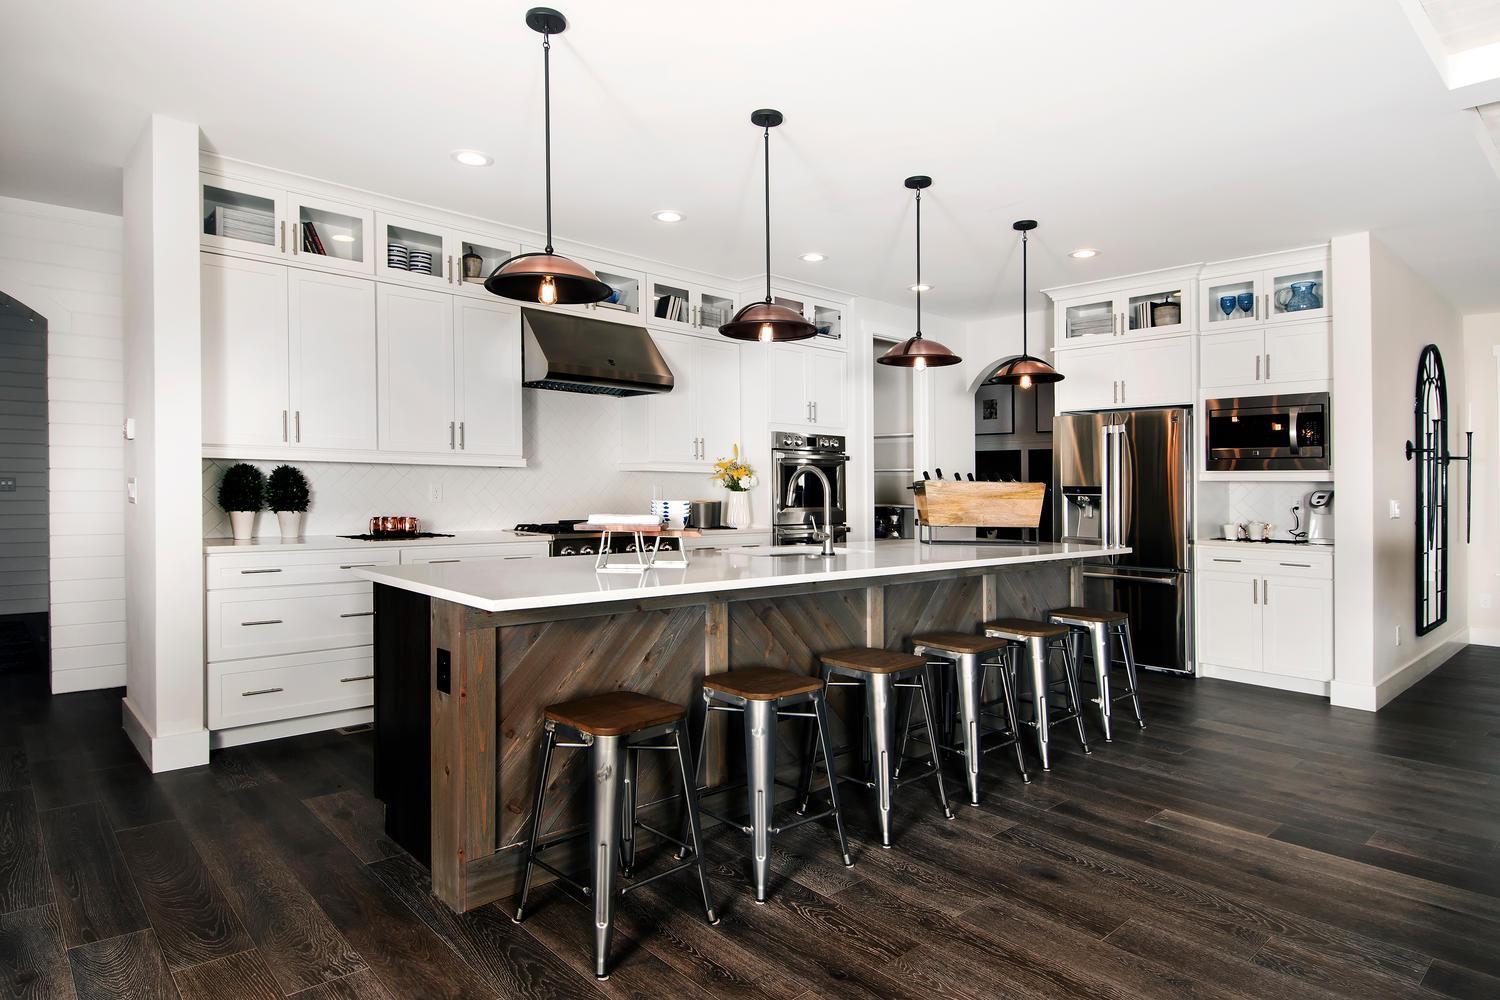 DreamFinders model home kitchen | Inspiration community near Parker CO